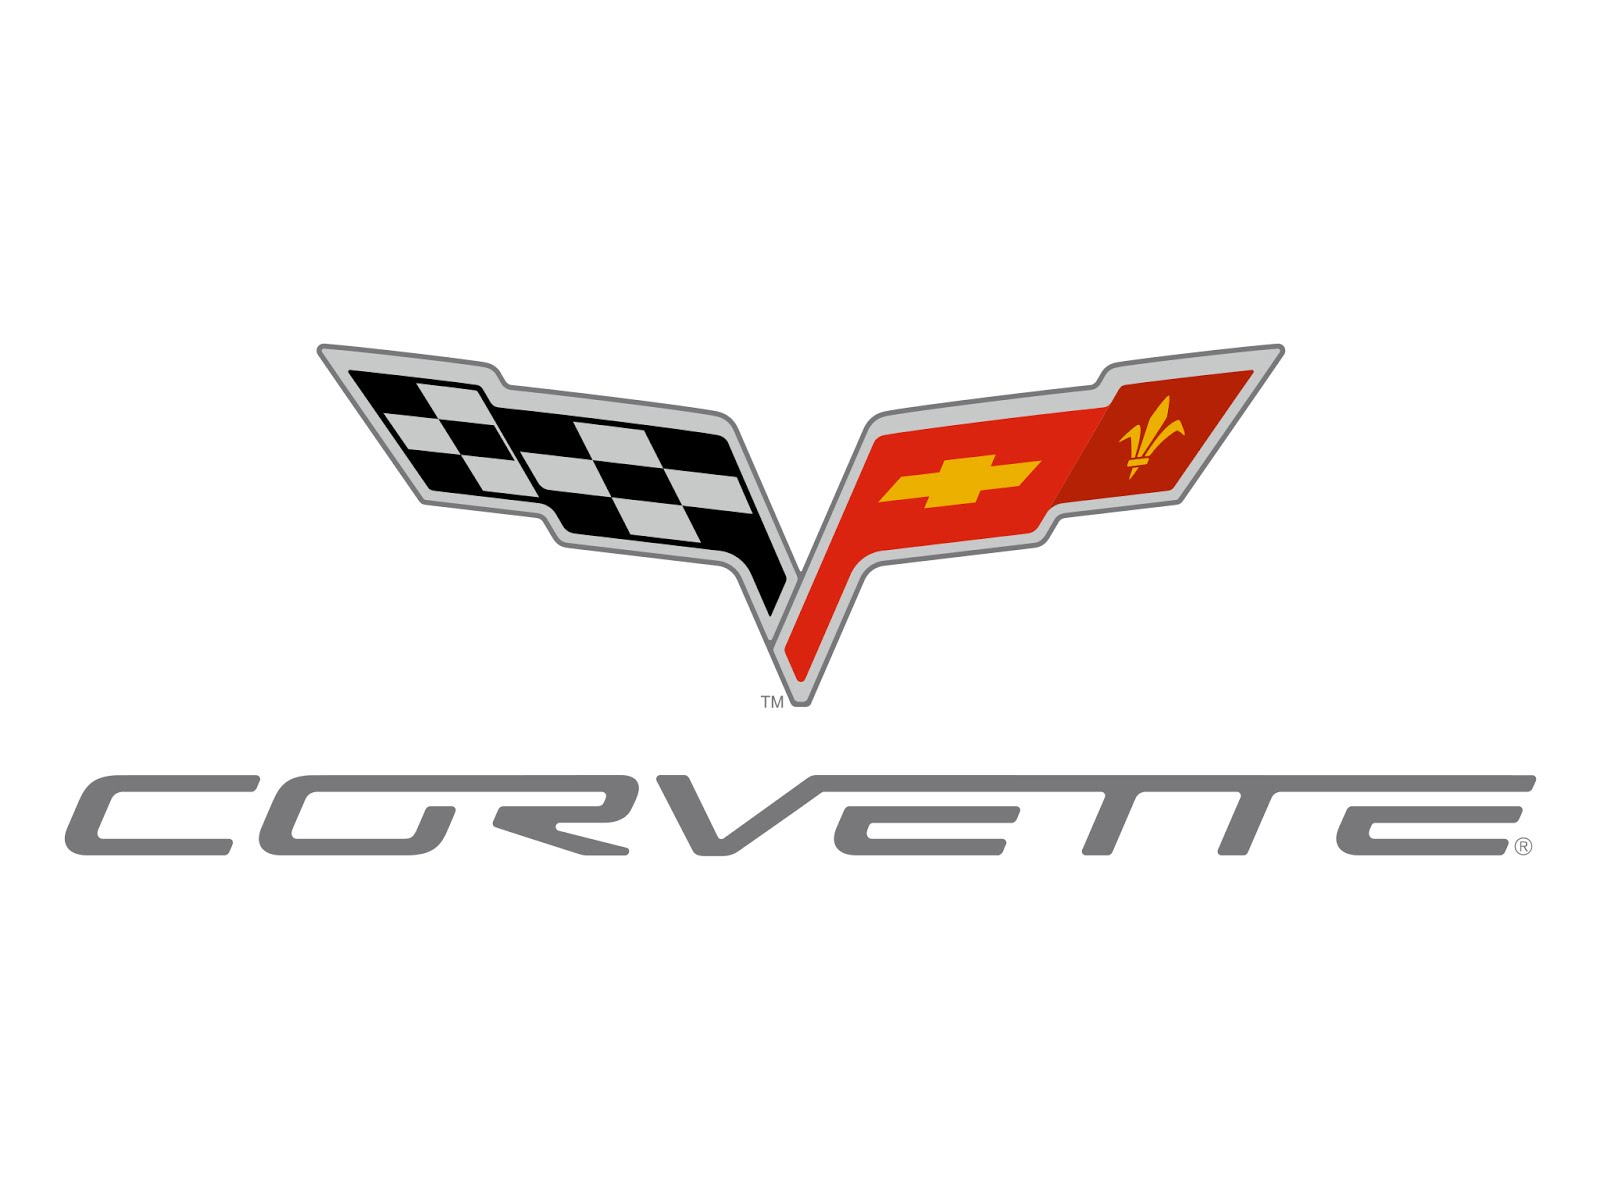 Sixth Generation Corvette Emblem